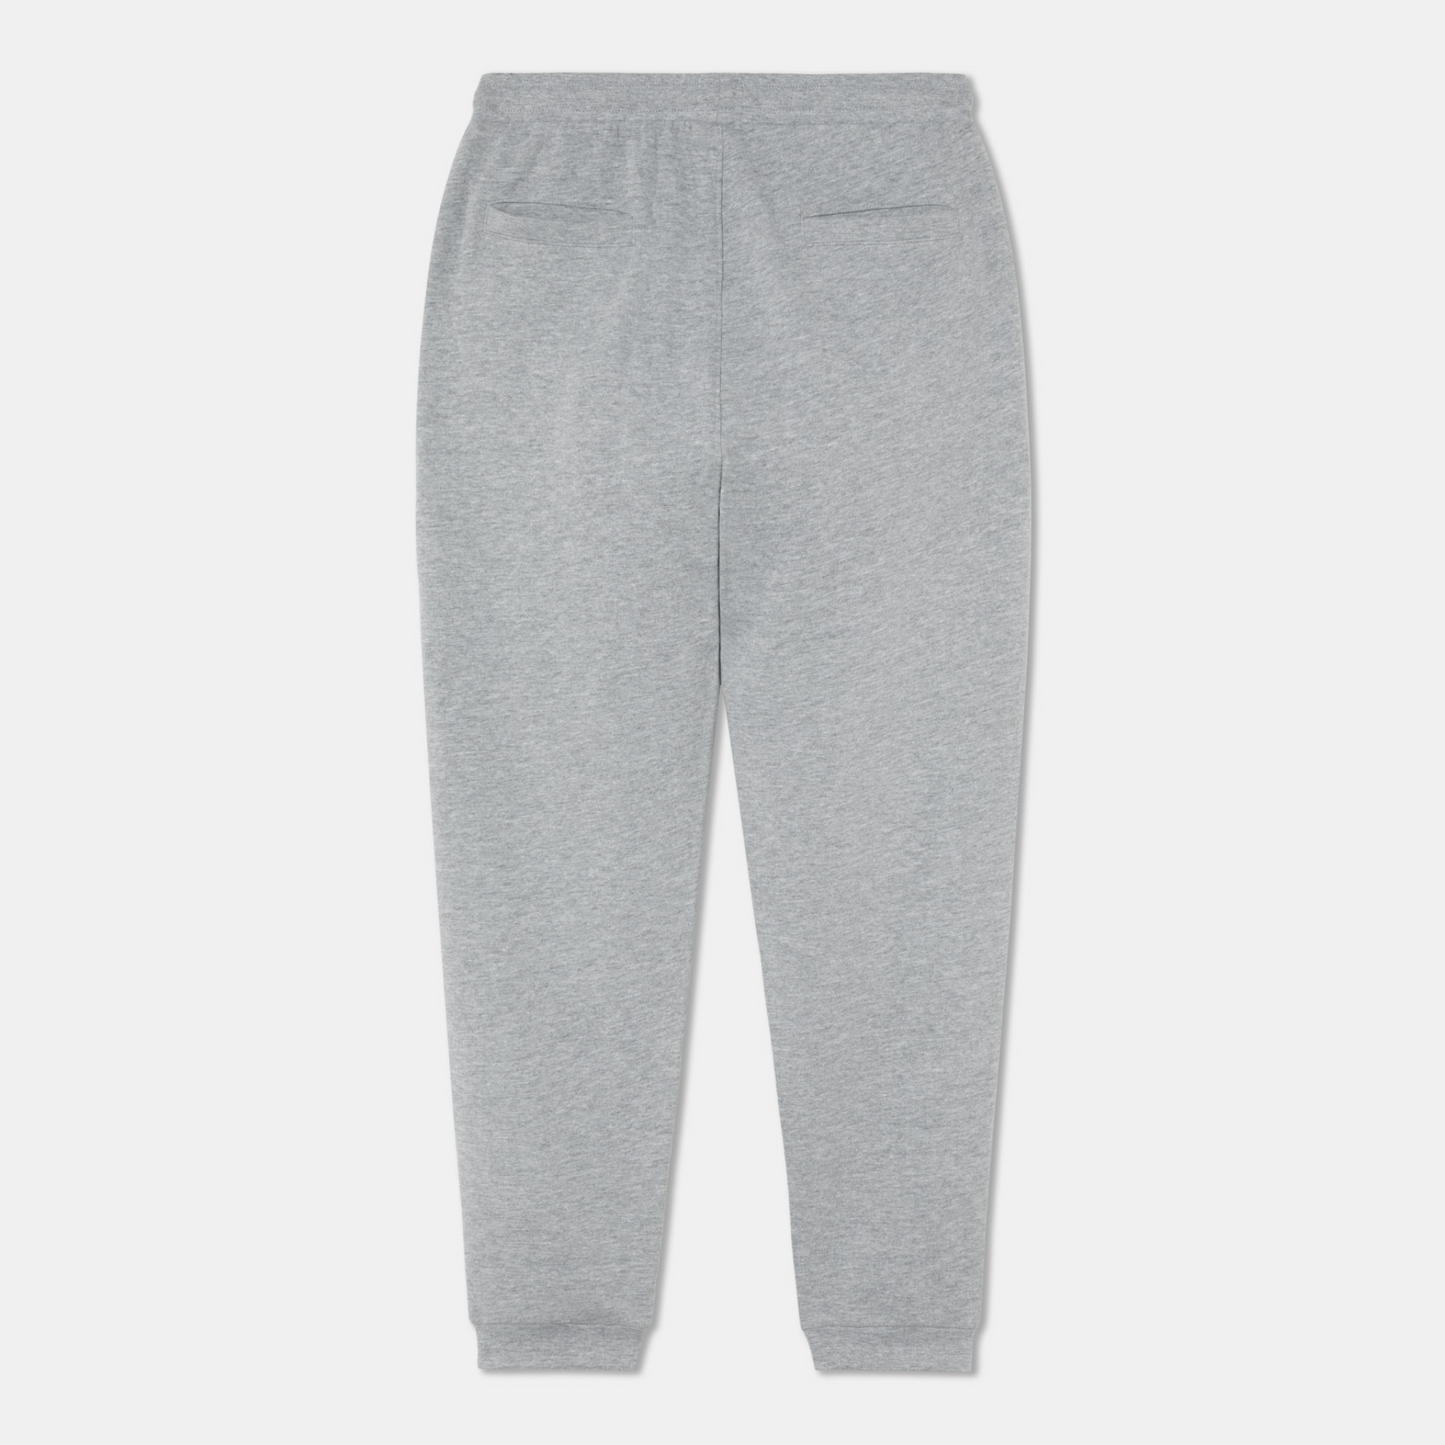 Organic Cotton Sport Trousers Pants Grey Back